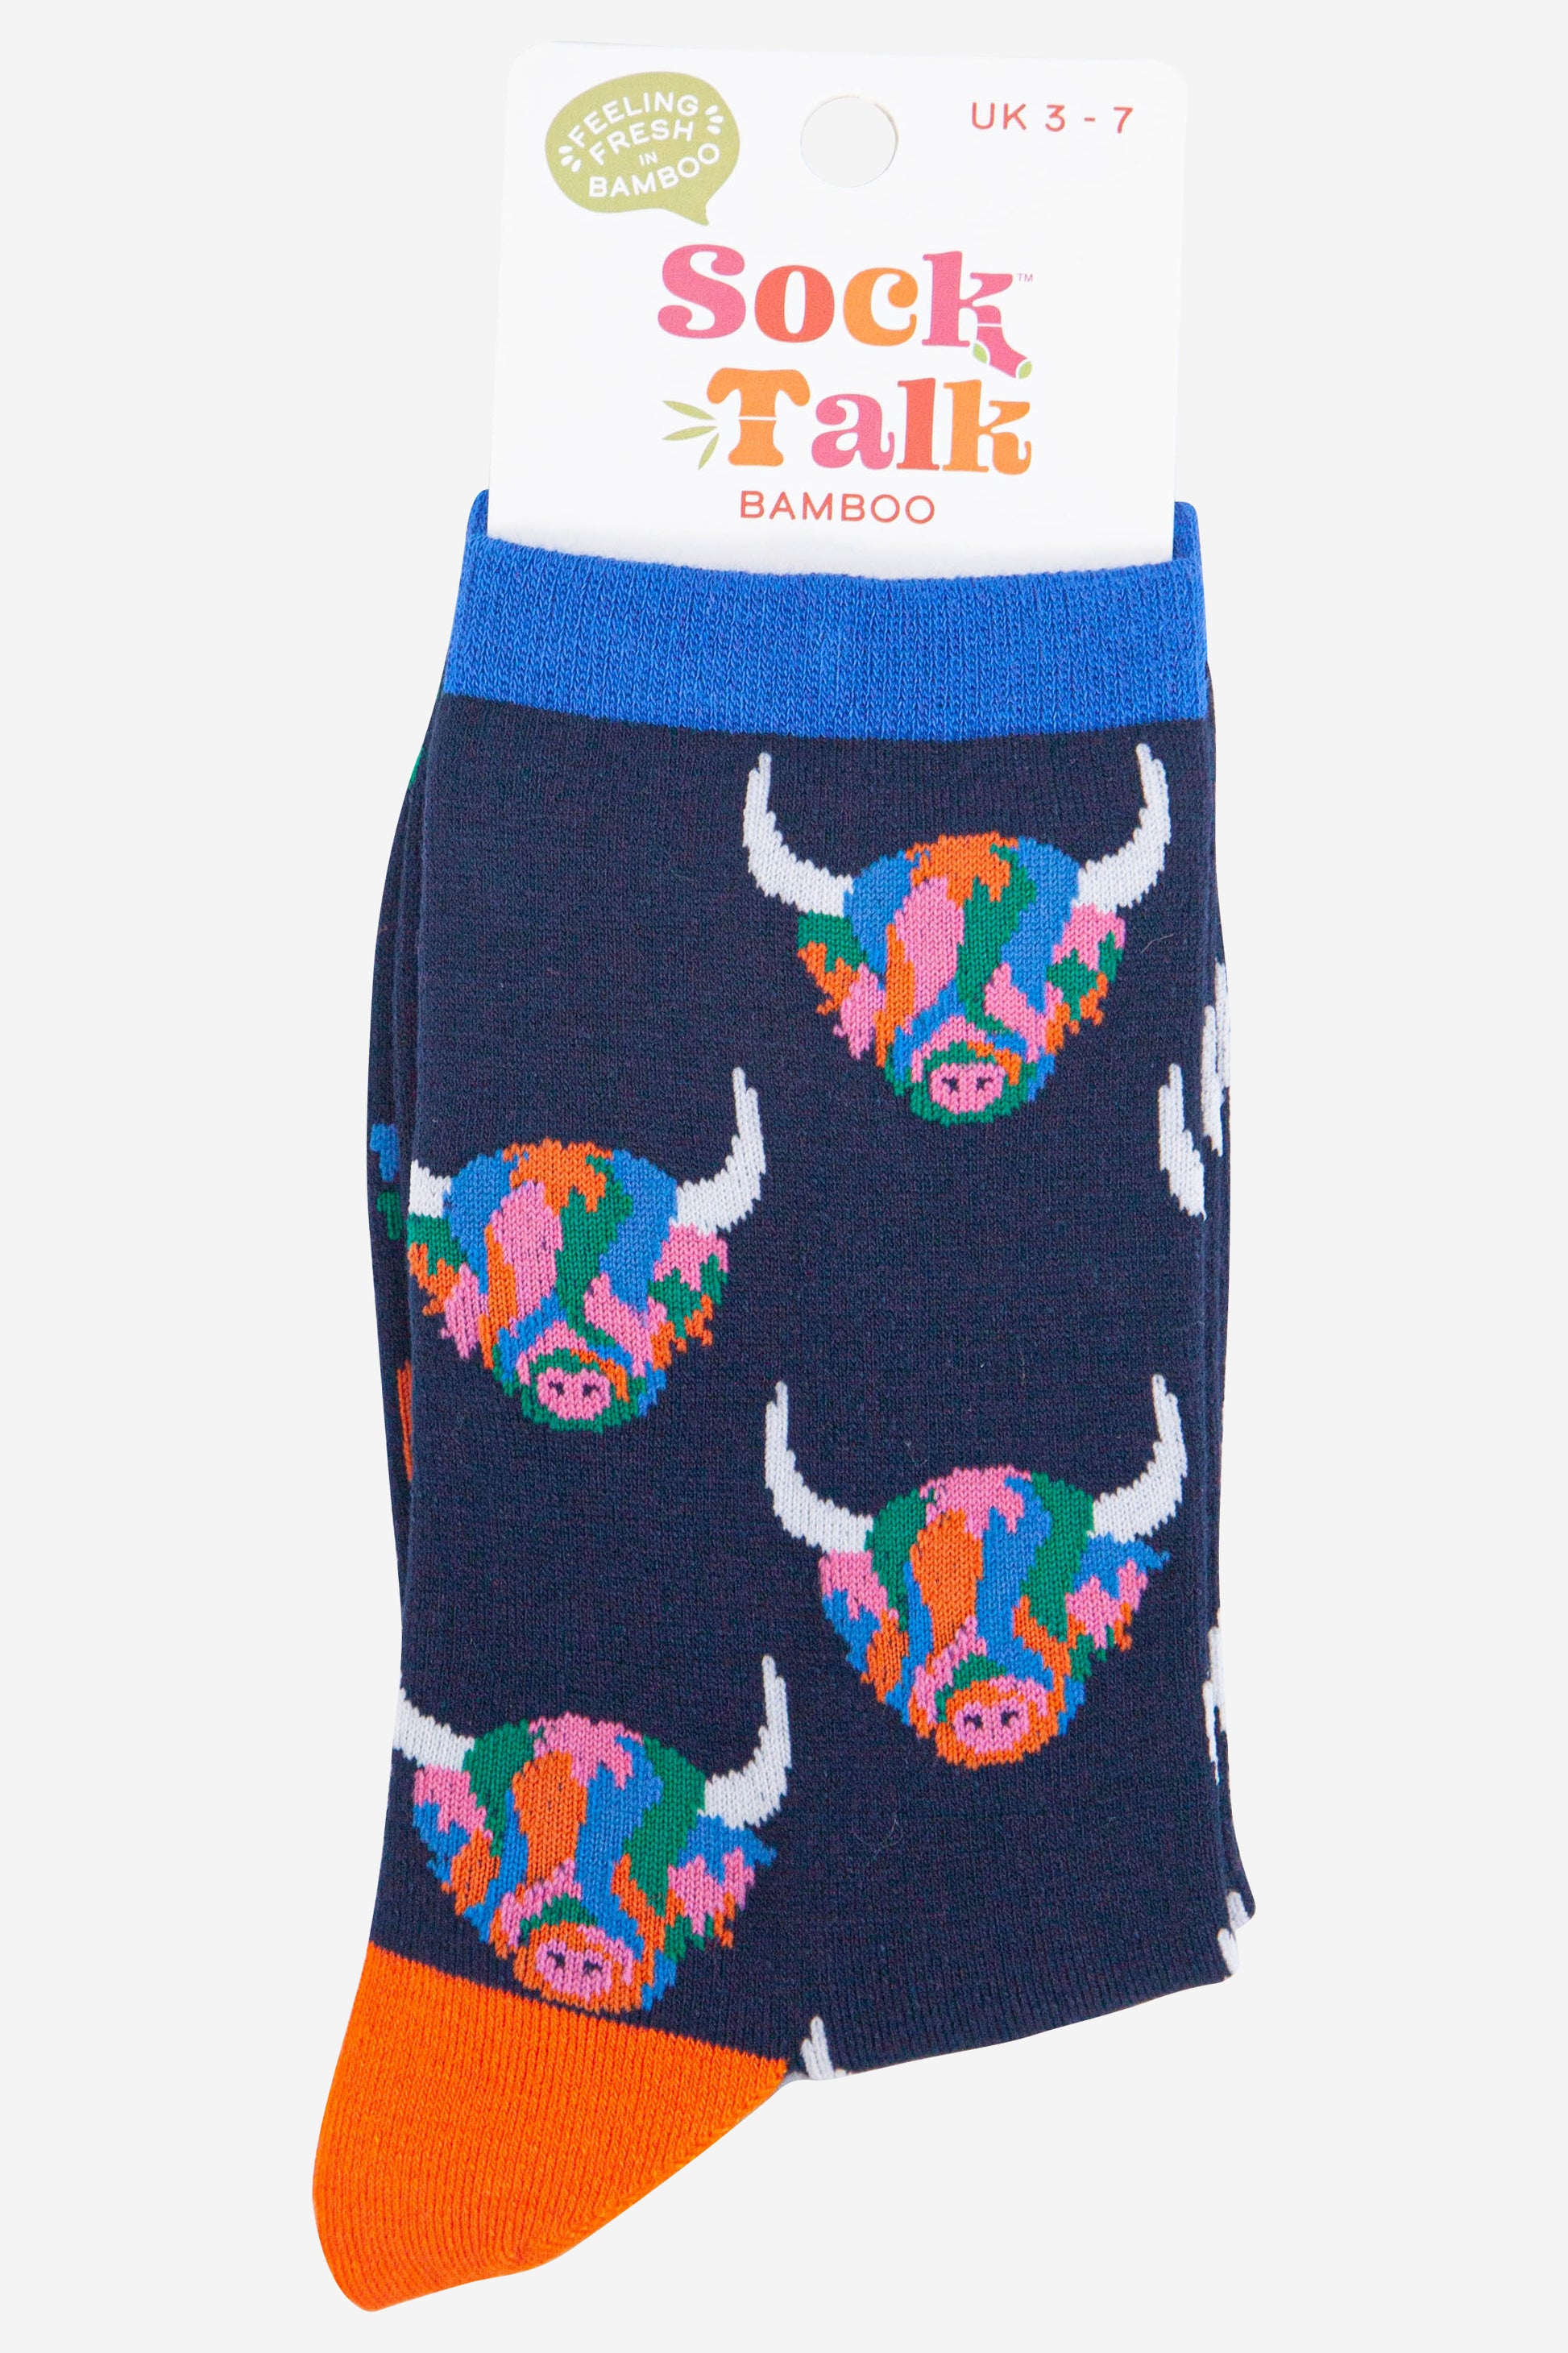 rainbow highland cow socks in navy blue uk size 3-7